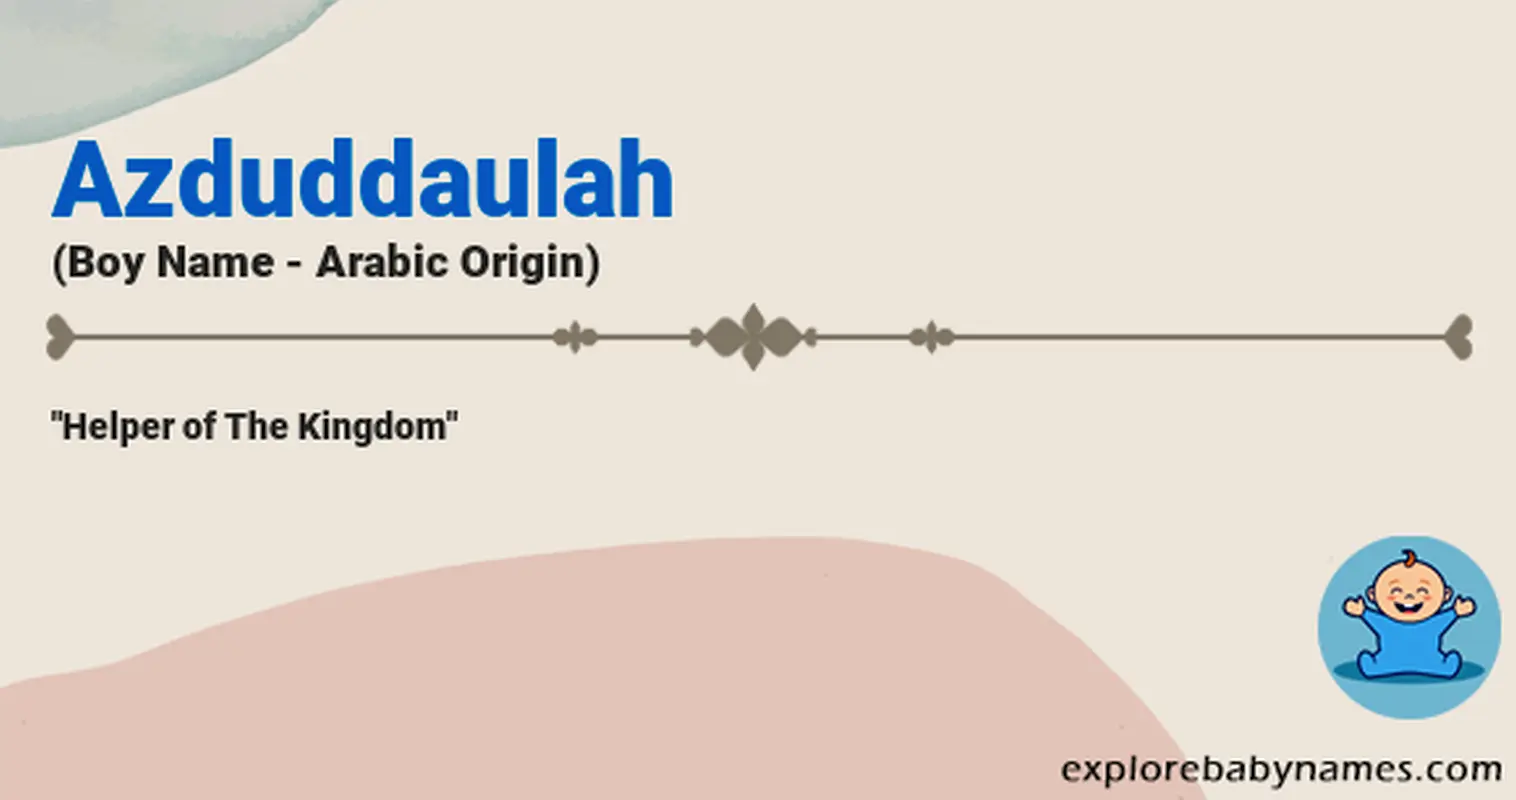 Meaning of Azduddaulah